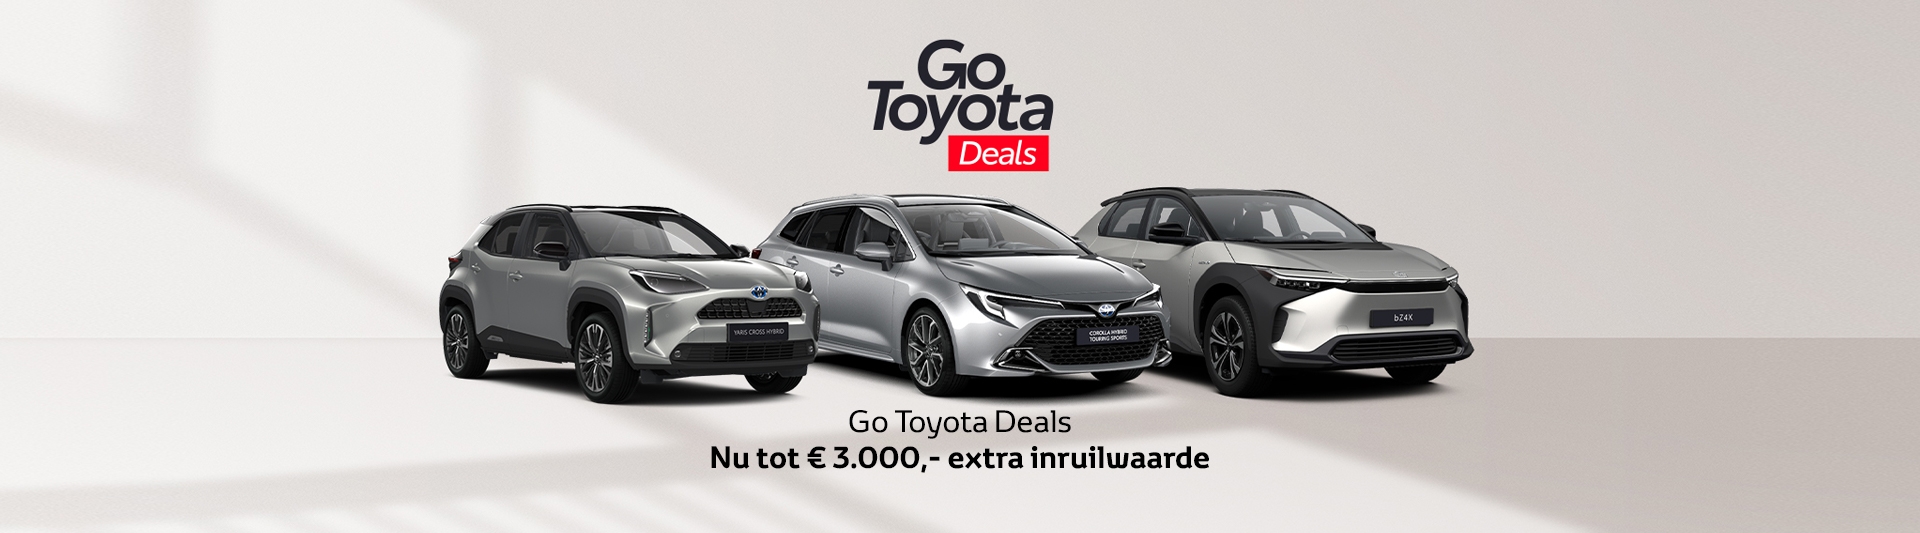 Go-Toyota-Deals-1920x533